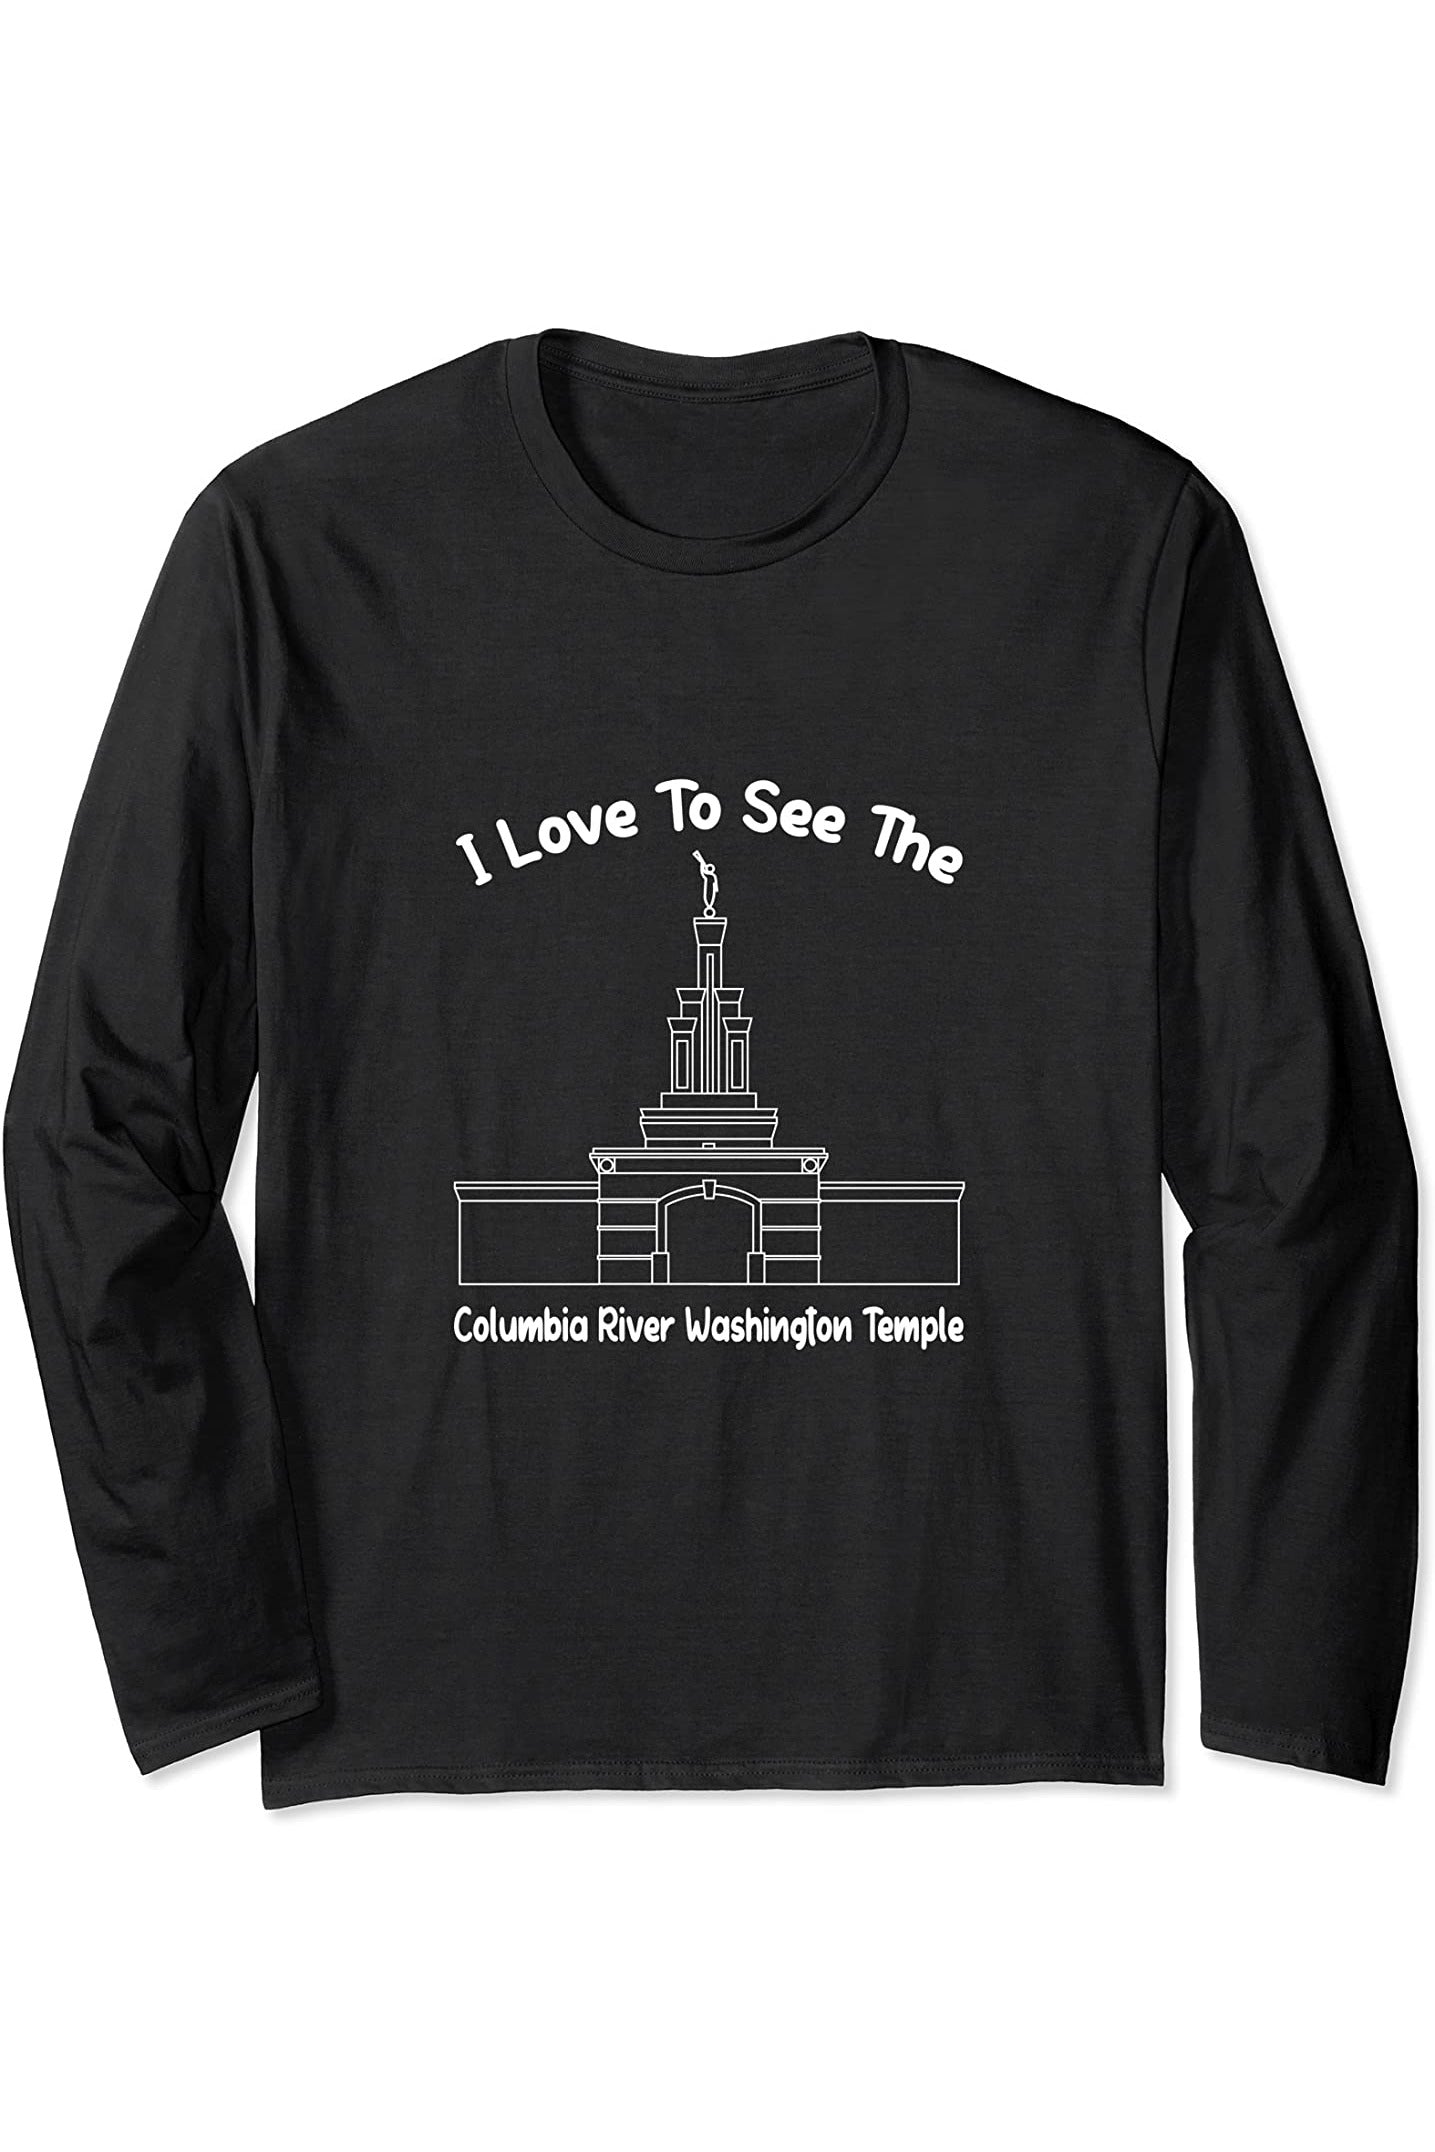 Columbia River Washington Temple Long Sleeve T-Shirt - Primary Style (English) US